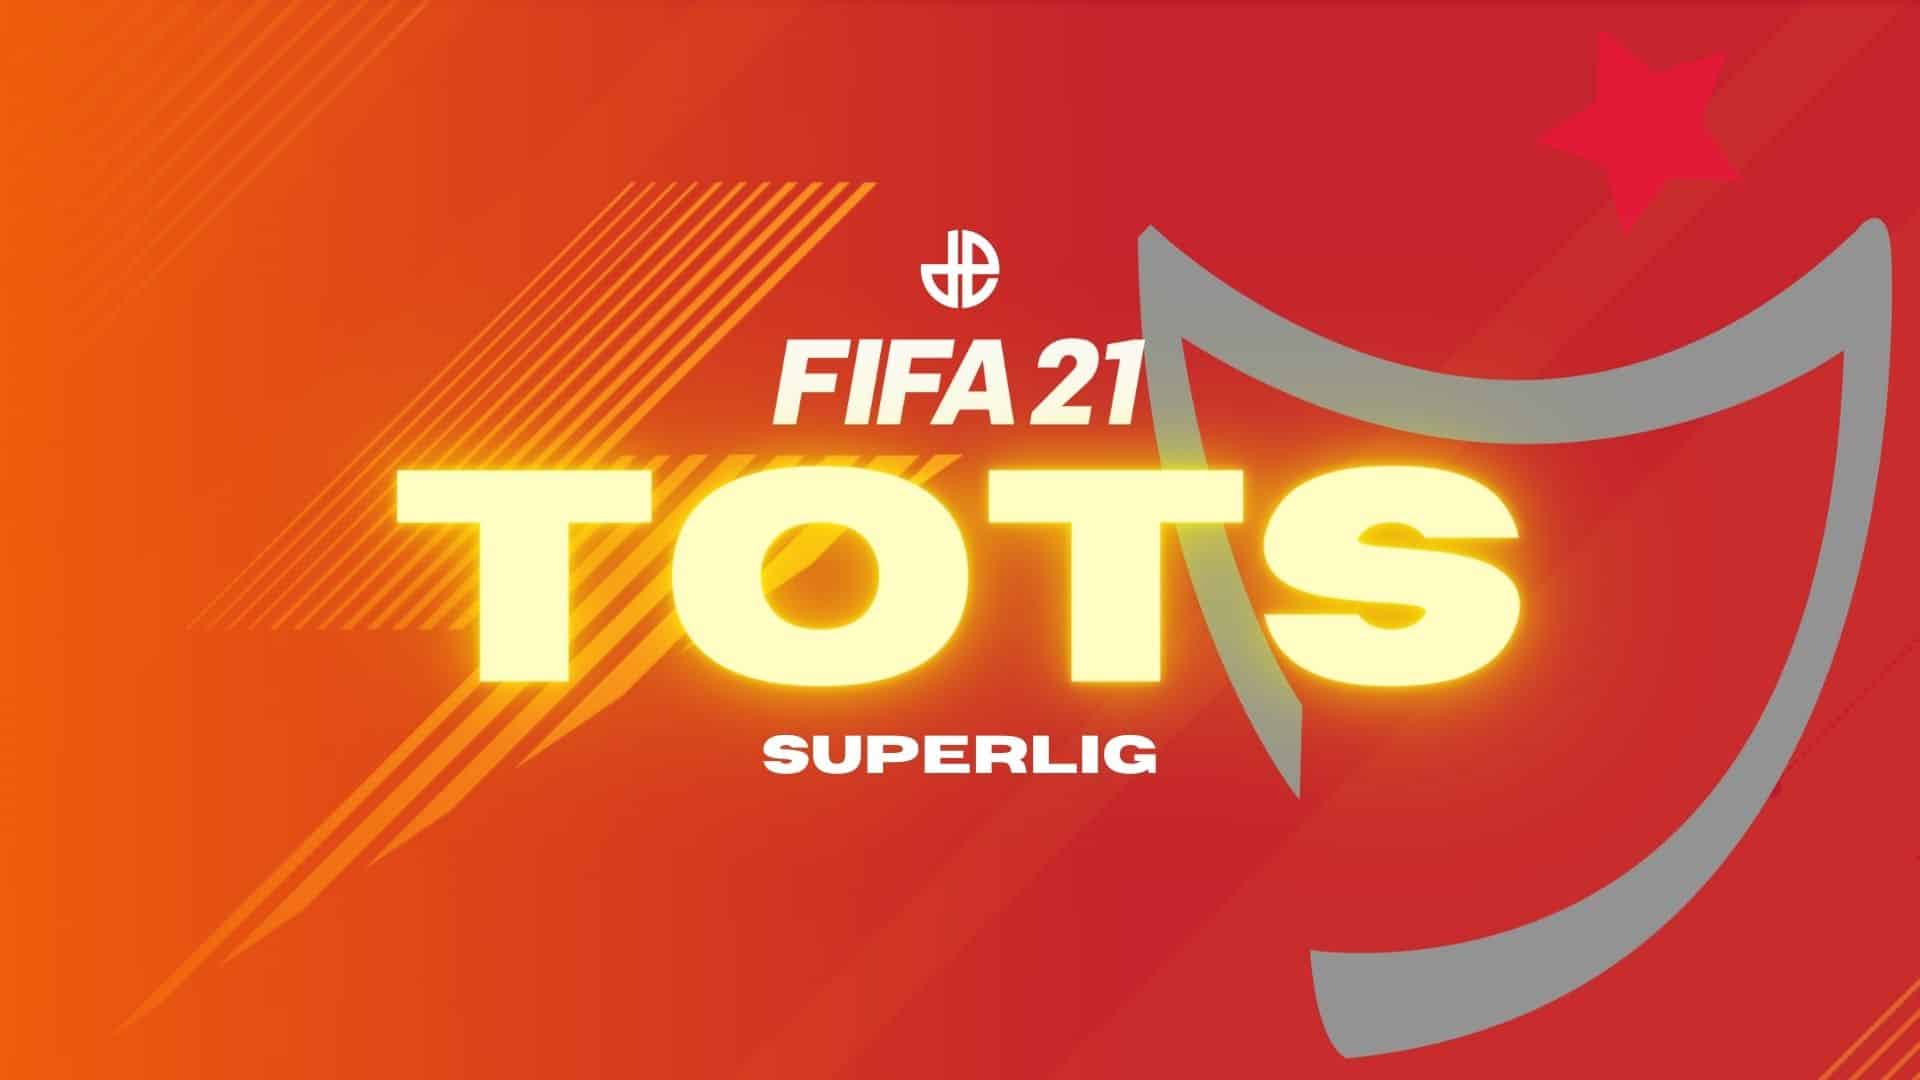 FIFA 21 Super Lig Team of the Season